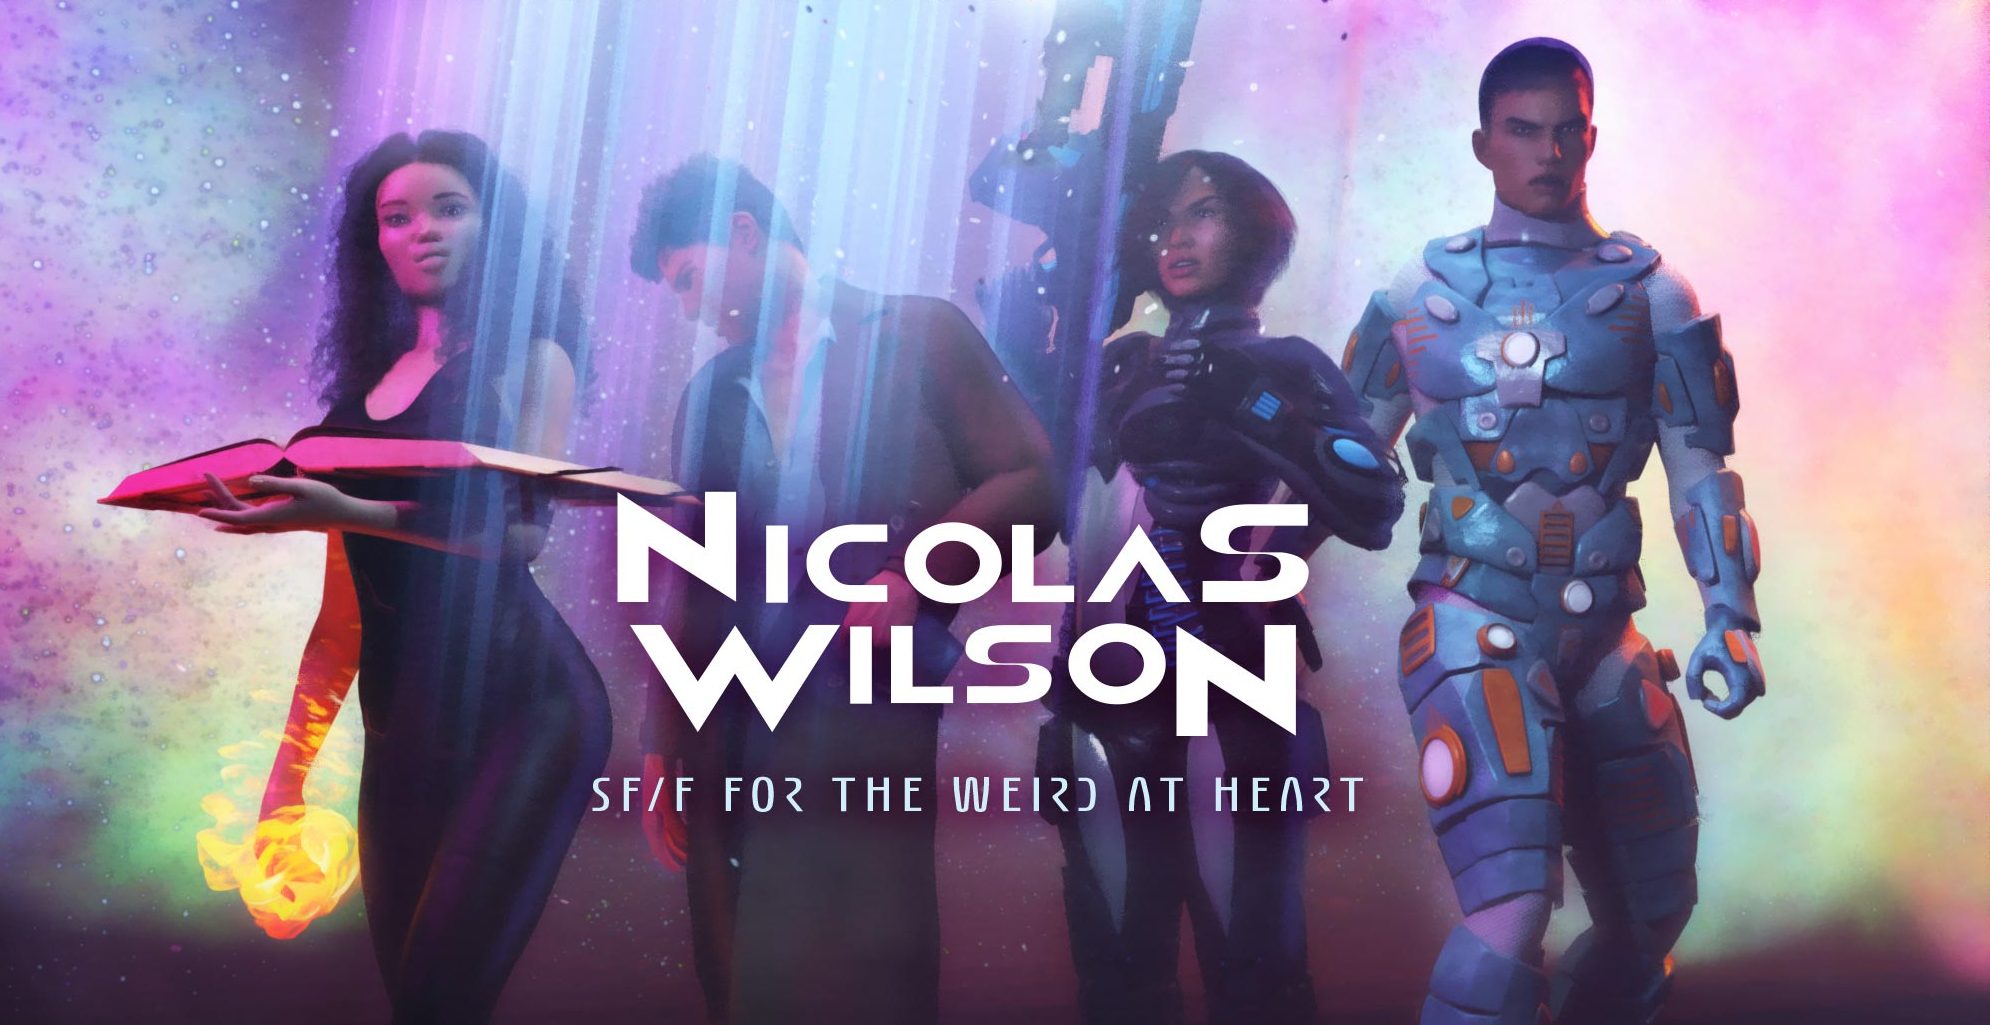 NicolasWilson.com SF/F For the Weird at Heart